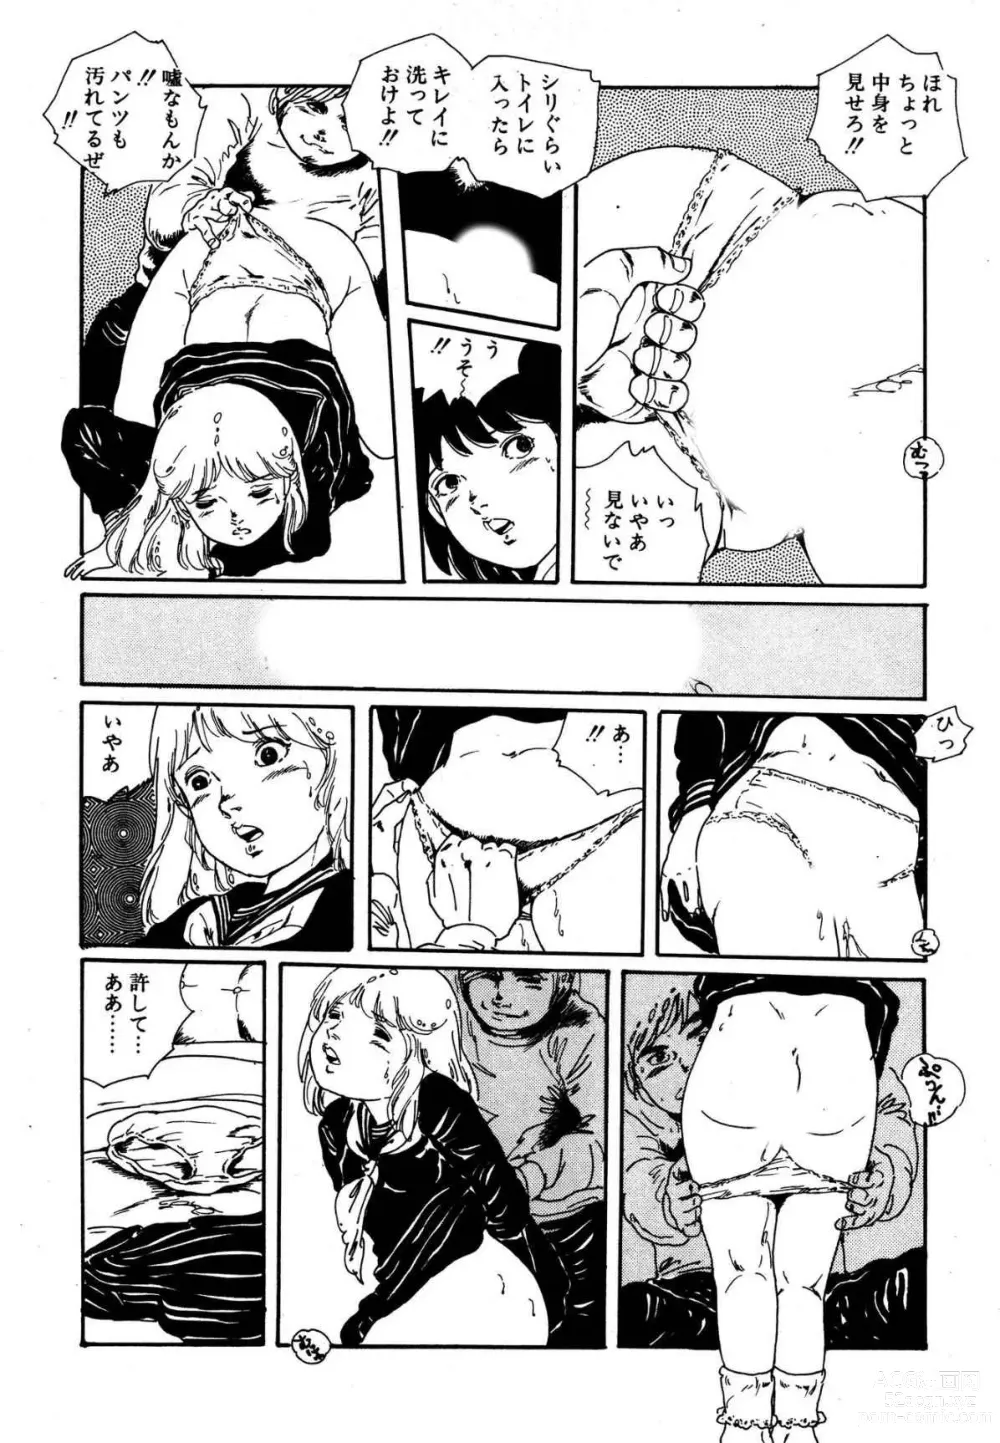 Page 11 of manga Dreaming fairy